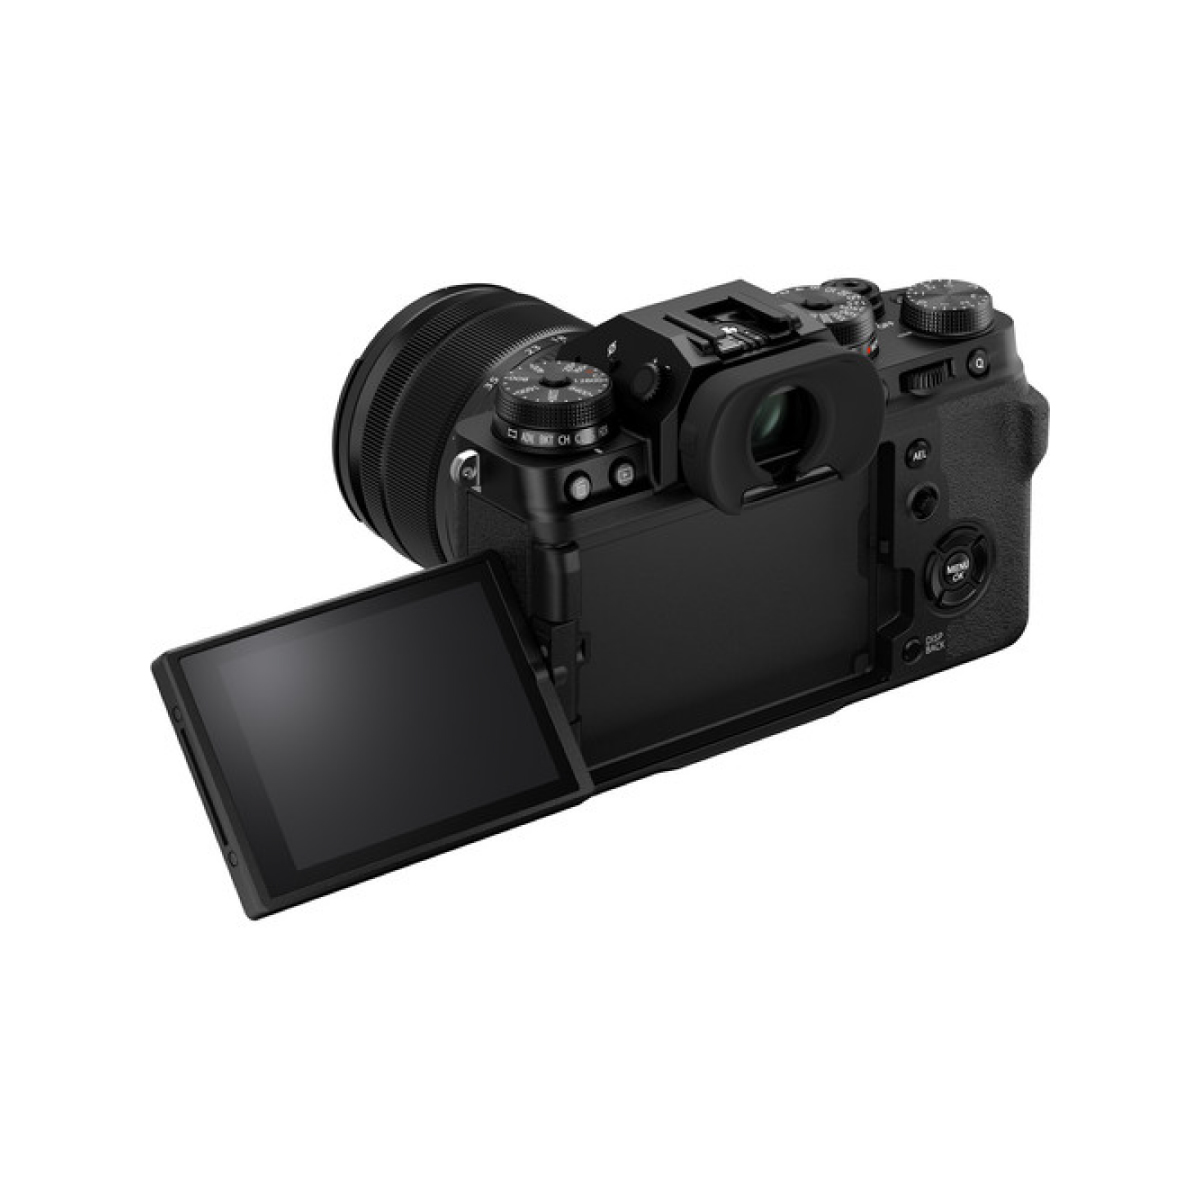 Fujifilm X-T4 26 MP Mirrorless Camera Body with XF16-80mm Lens – Black (7)